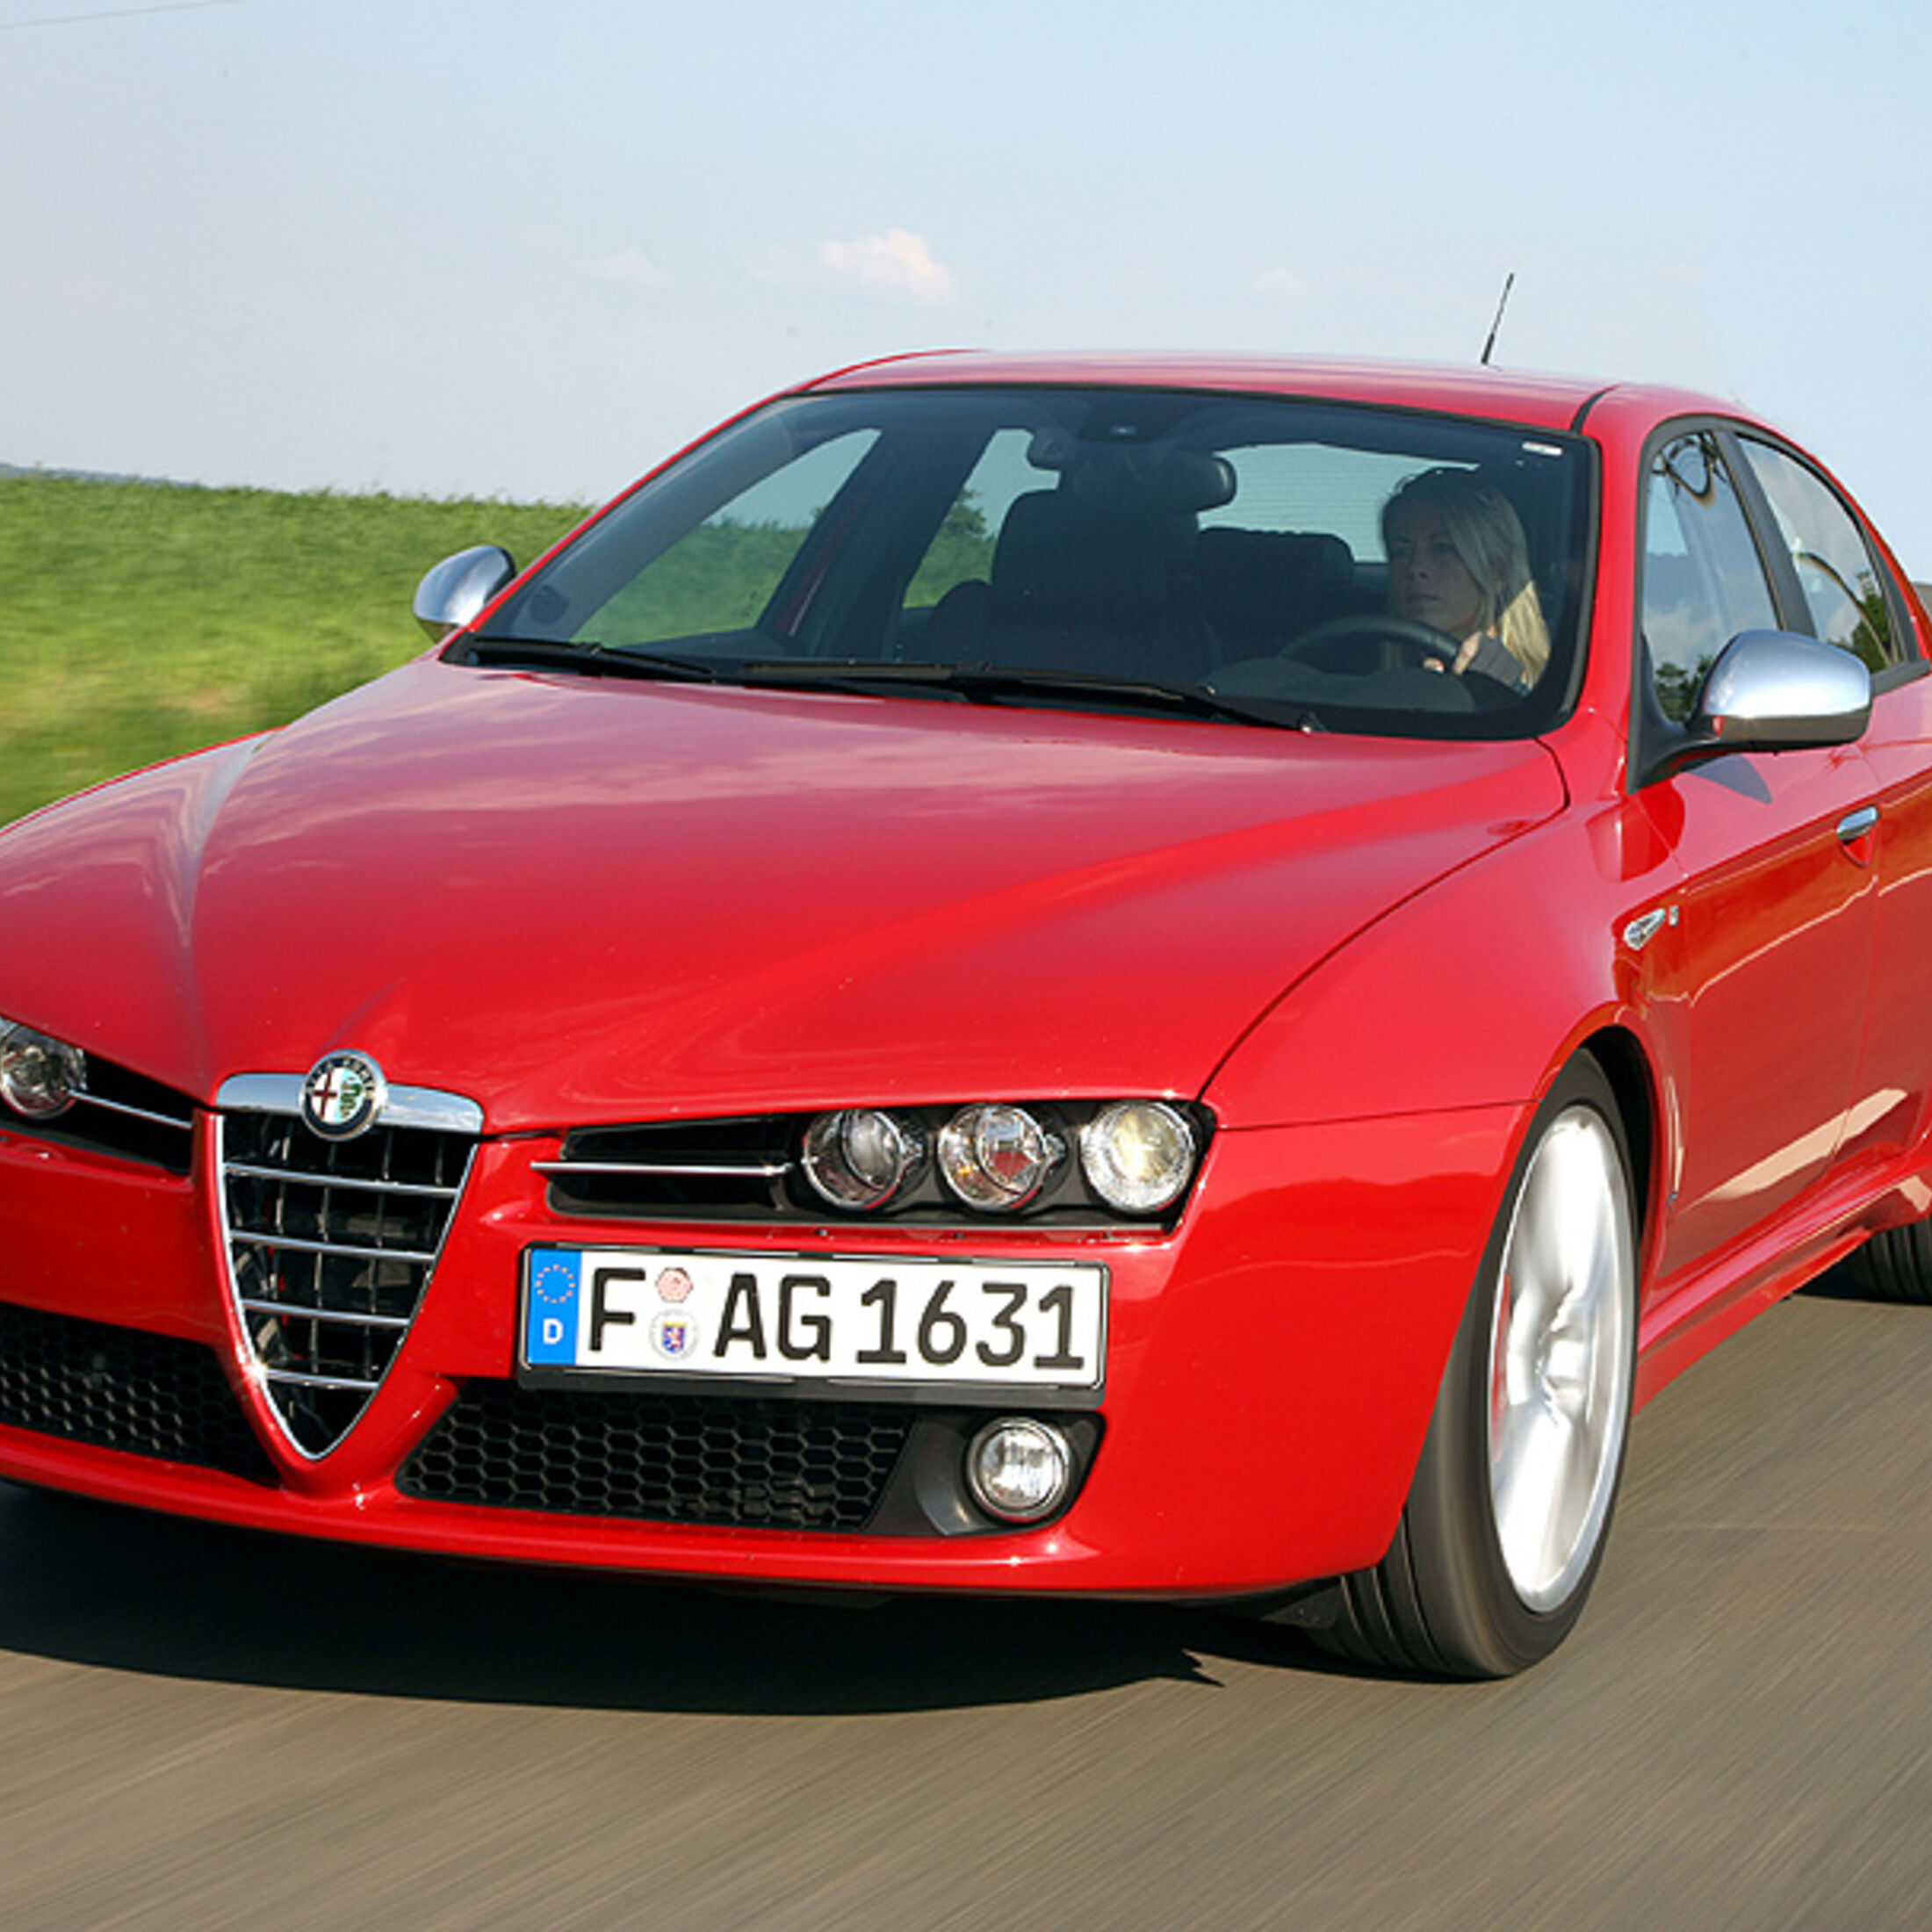 https://imgr1.auto-motor-und-sport.de/Alfa-Romeo-159ti-Limousine-jsonLd1x1-e46d1a23-306415.jpg